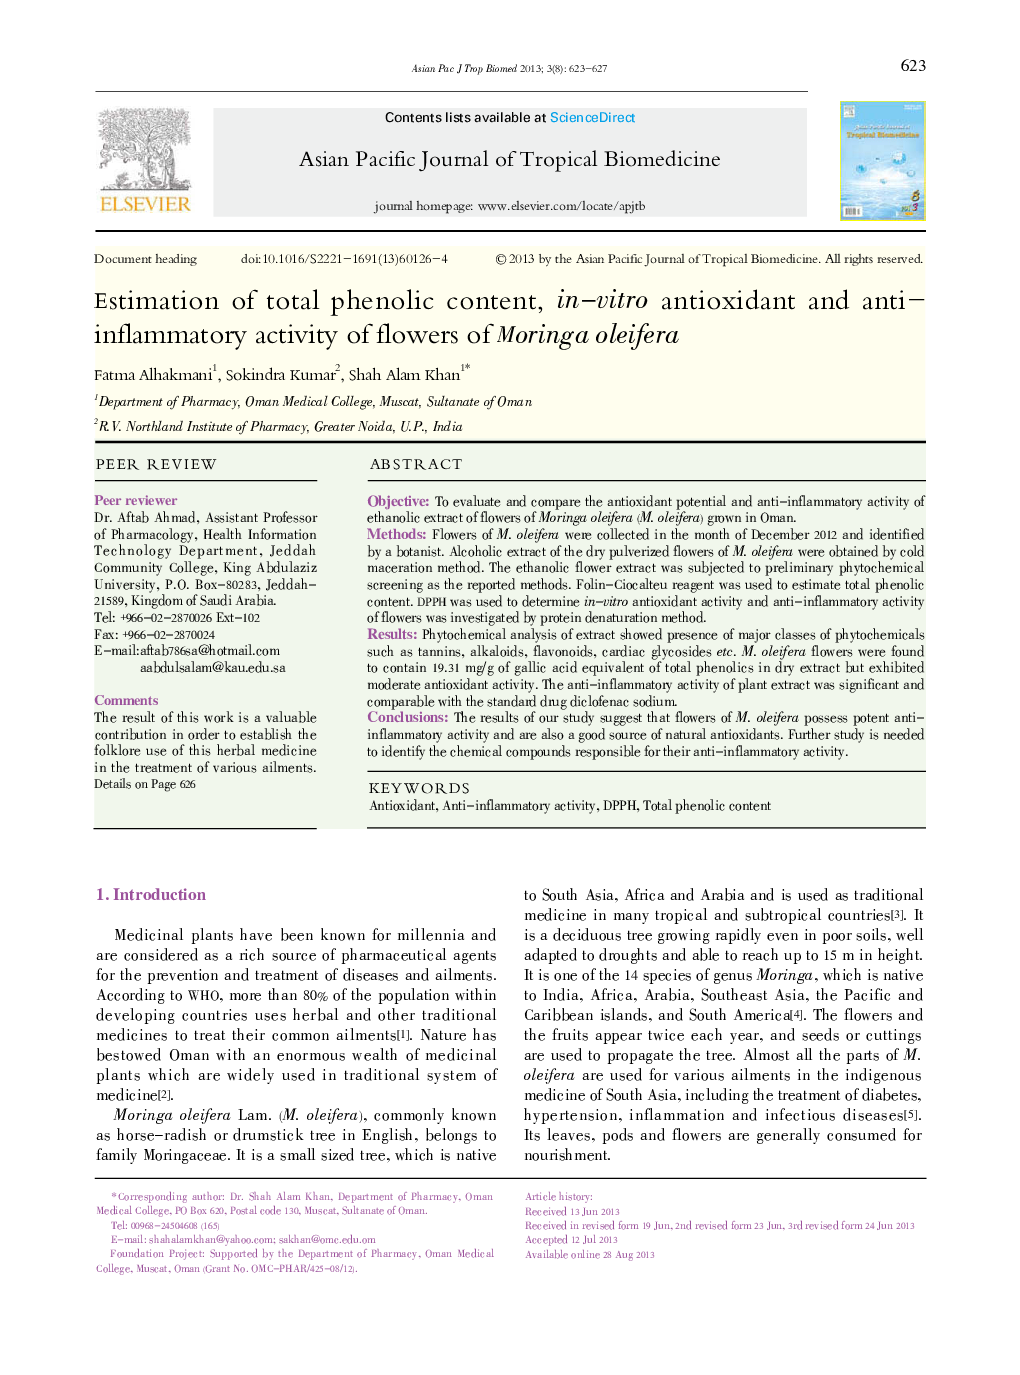 Estimation of total phenolic content, in-vitro antioxidant and anti-inflammatory activity of flowers of Moringa oleifera